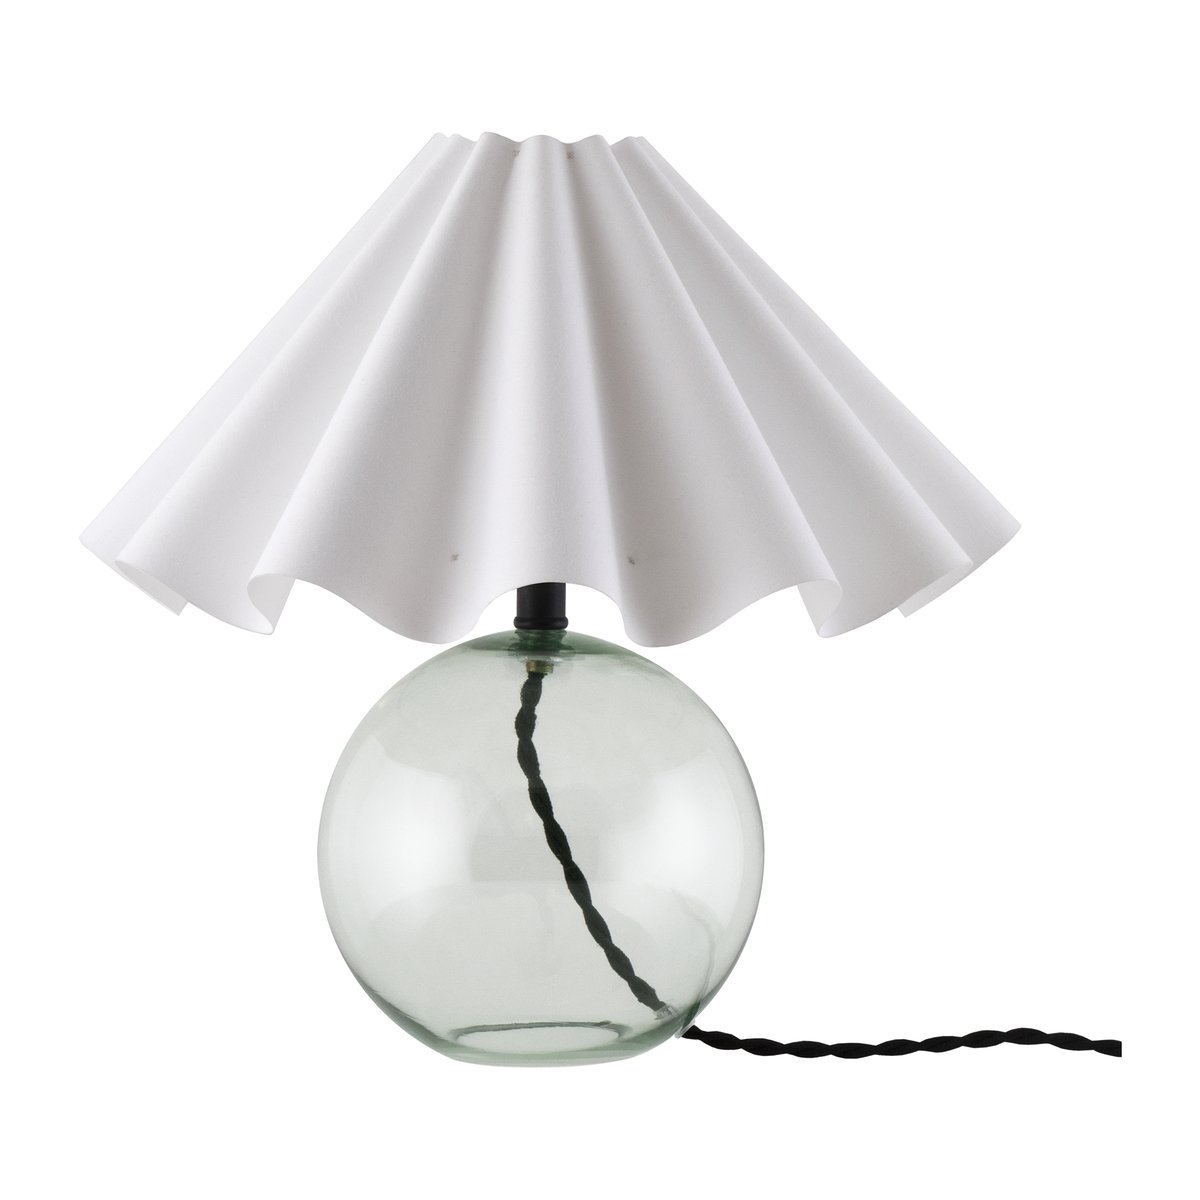 Globen Lighting Judith tafellamp Ø30 cm Groen-wit